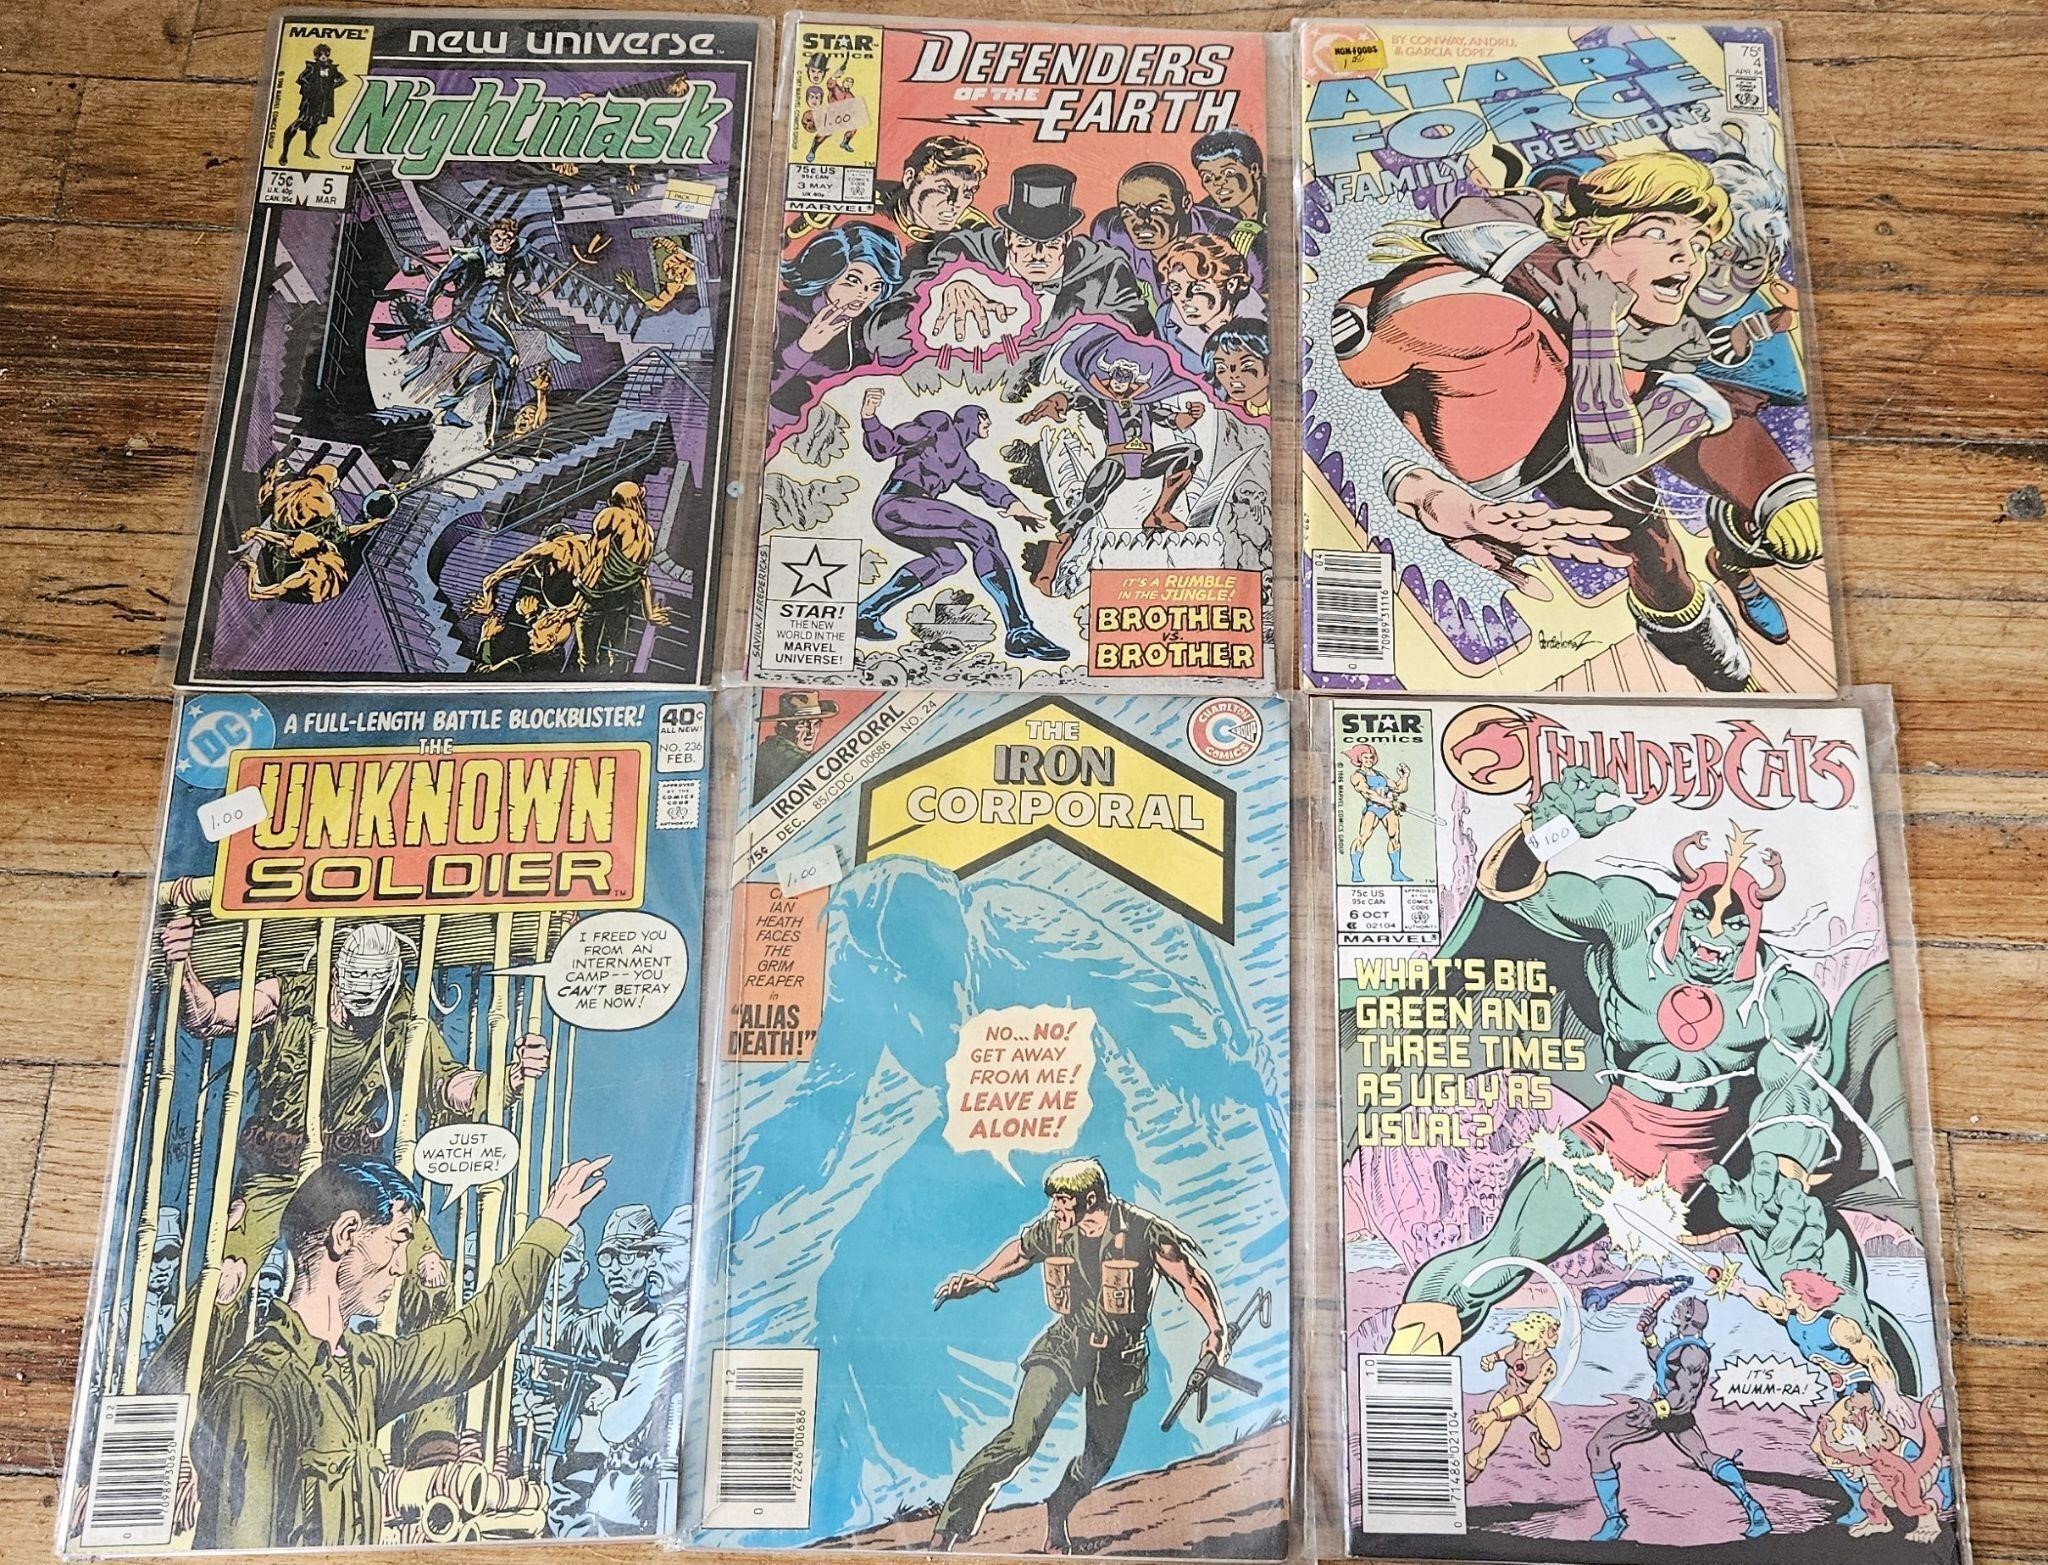 Lot of 6 Comic Books Thunder Cats Nightmask